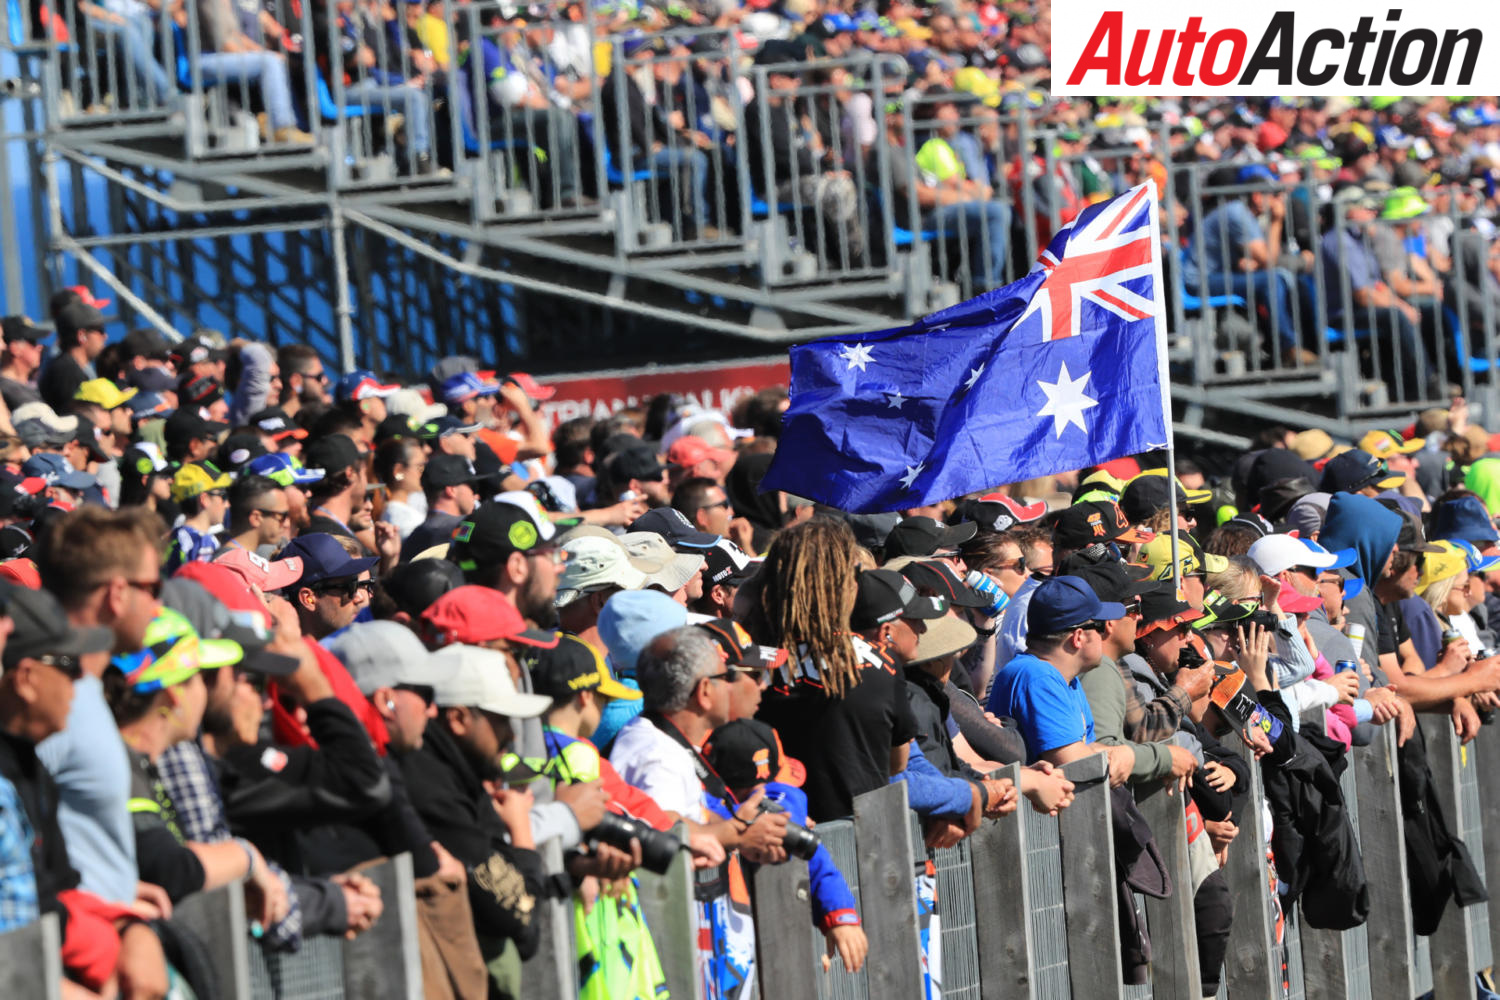 The reason for Australian Grand Prix crowd cap - Image: Motorsport Images